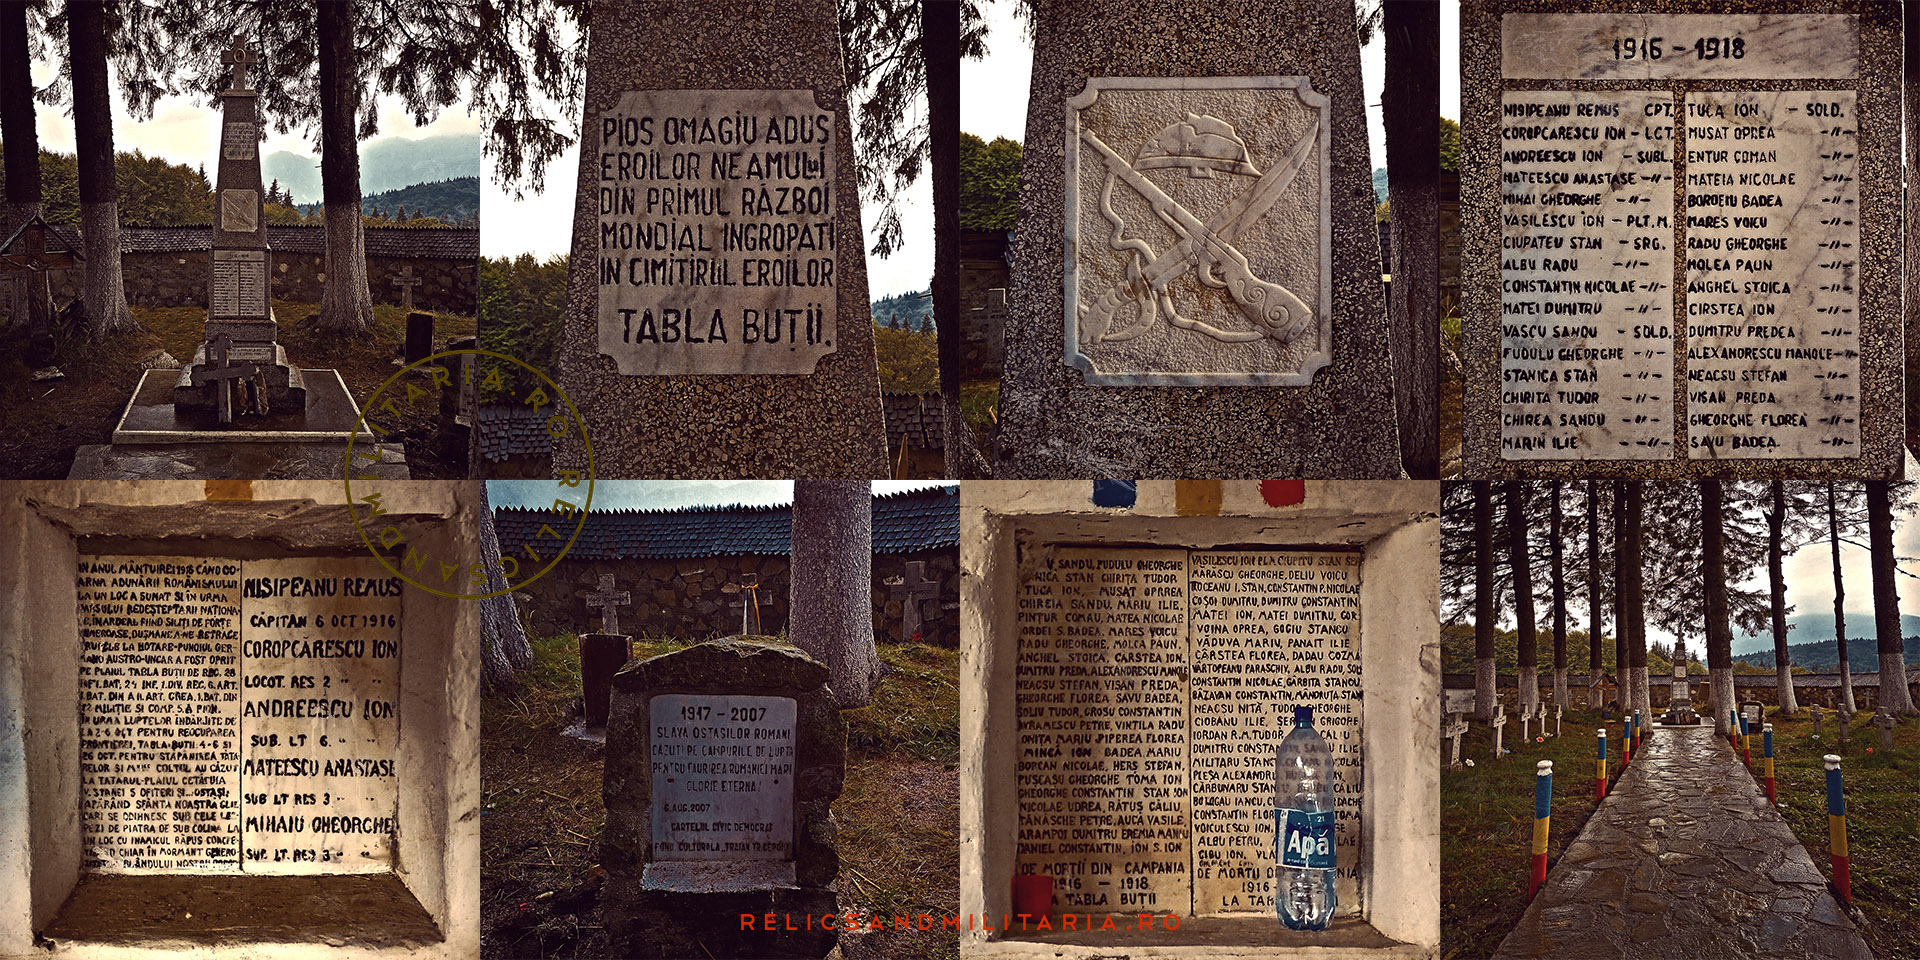 Cimitirul Eroilor Tabla Butii